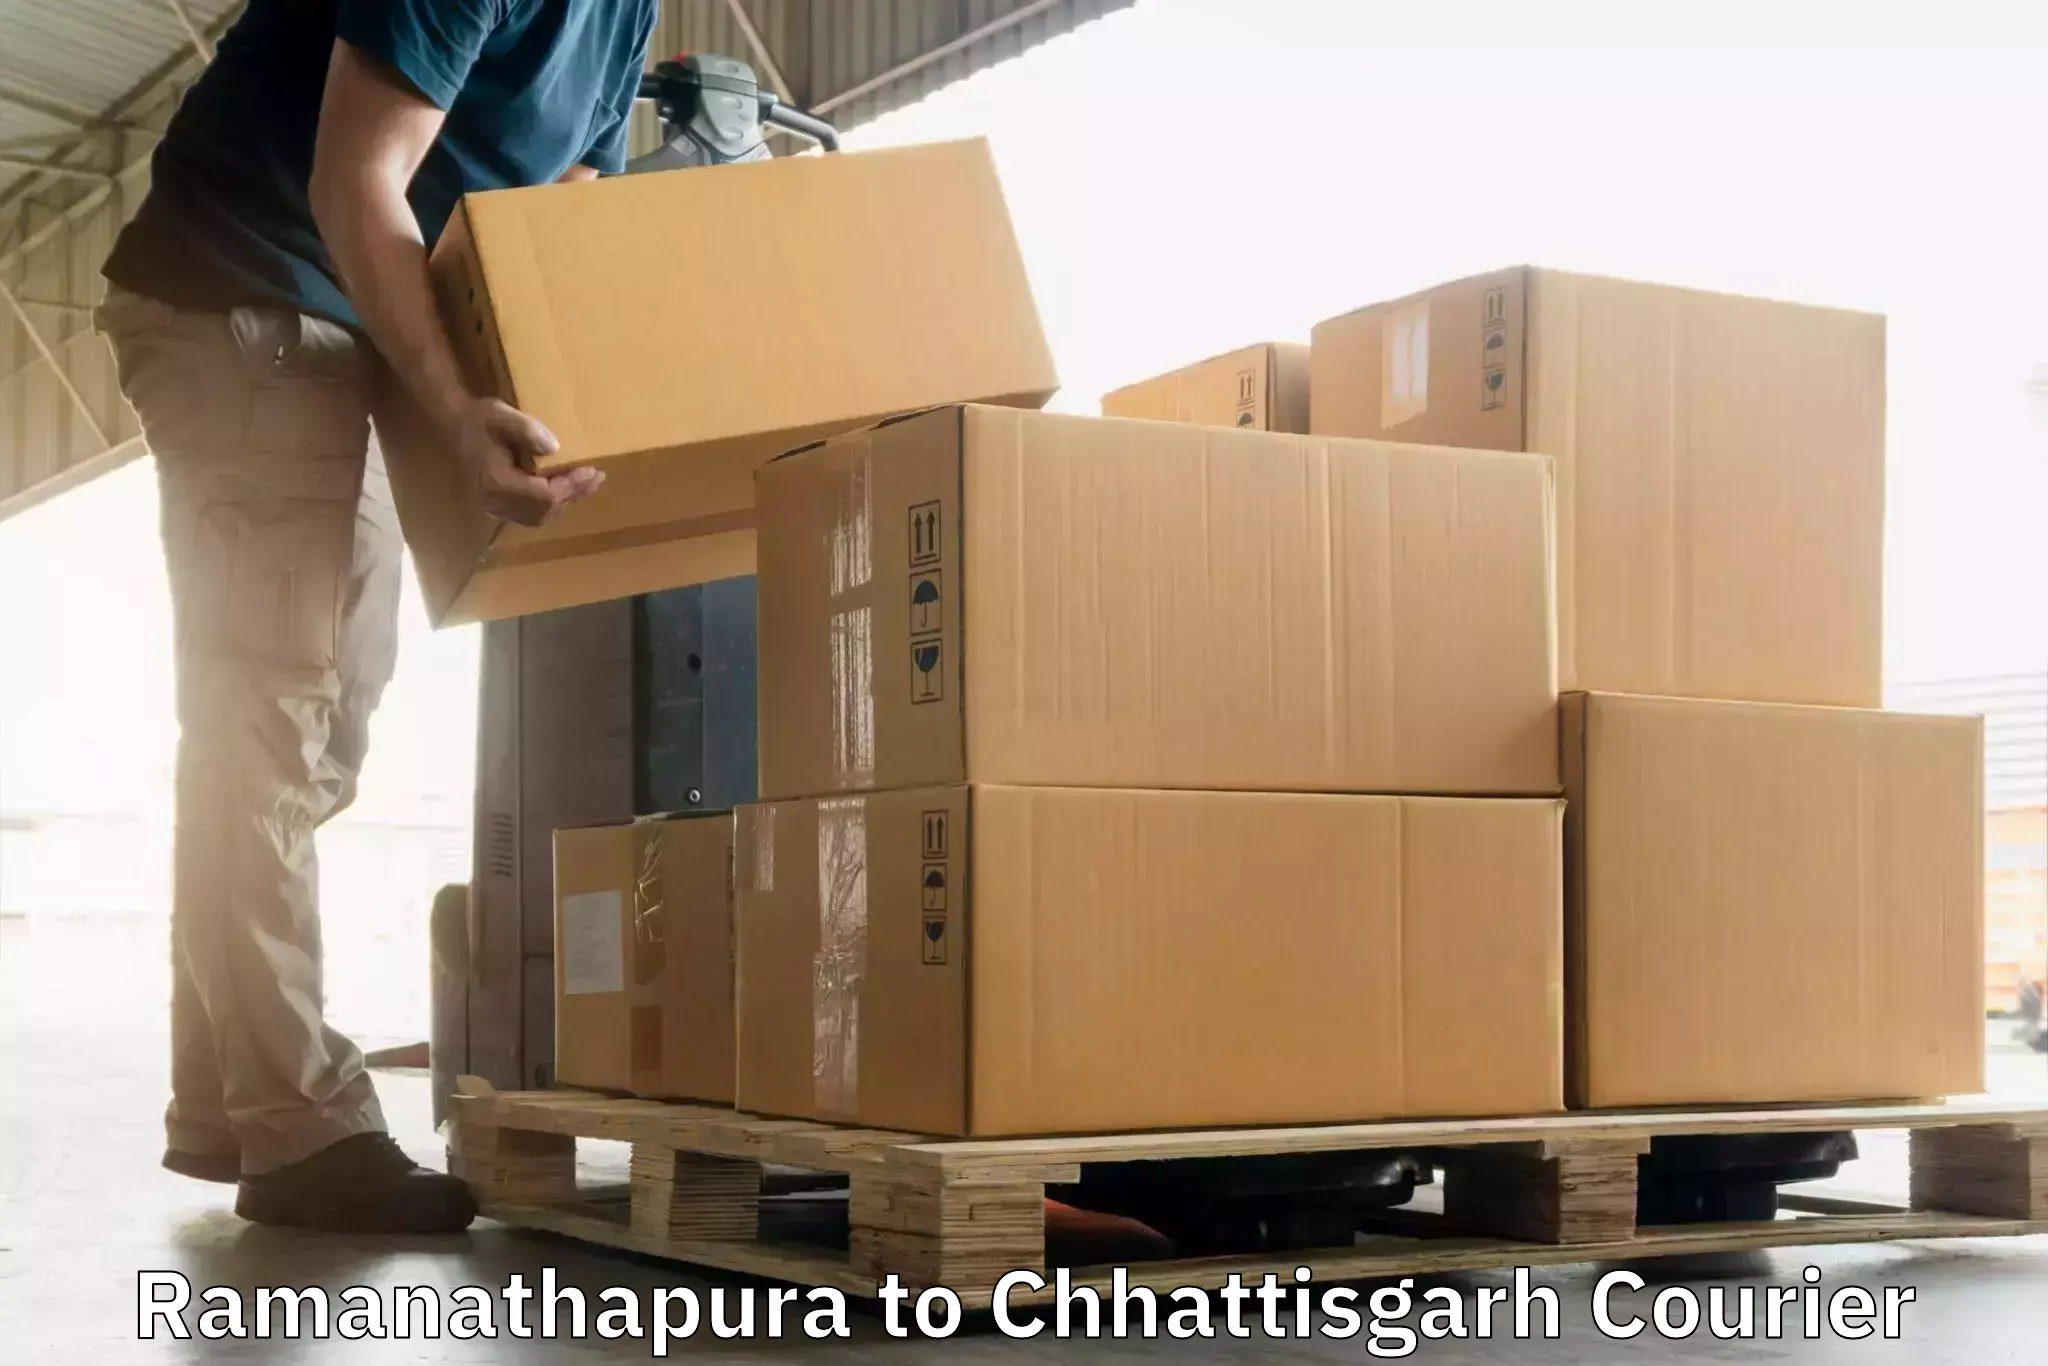 Efficient cargo handling Ramanathapura to Raigarh